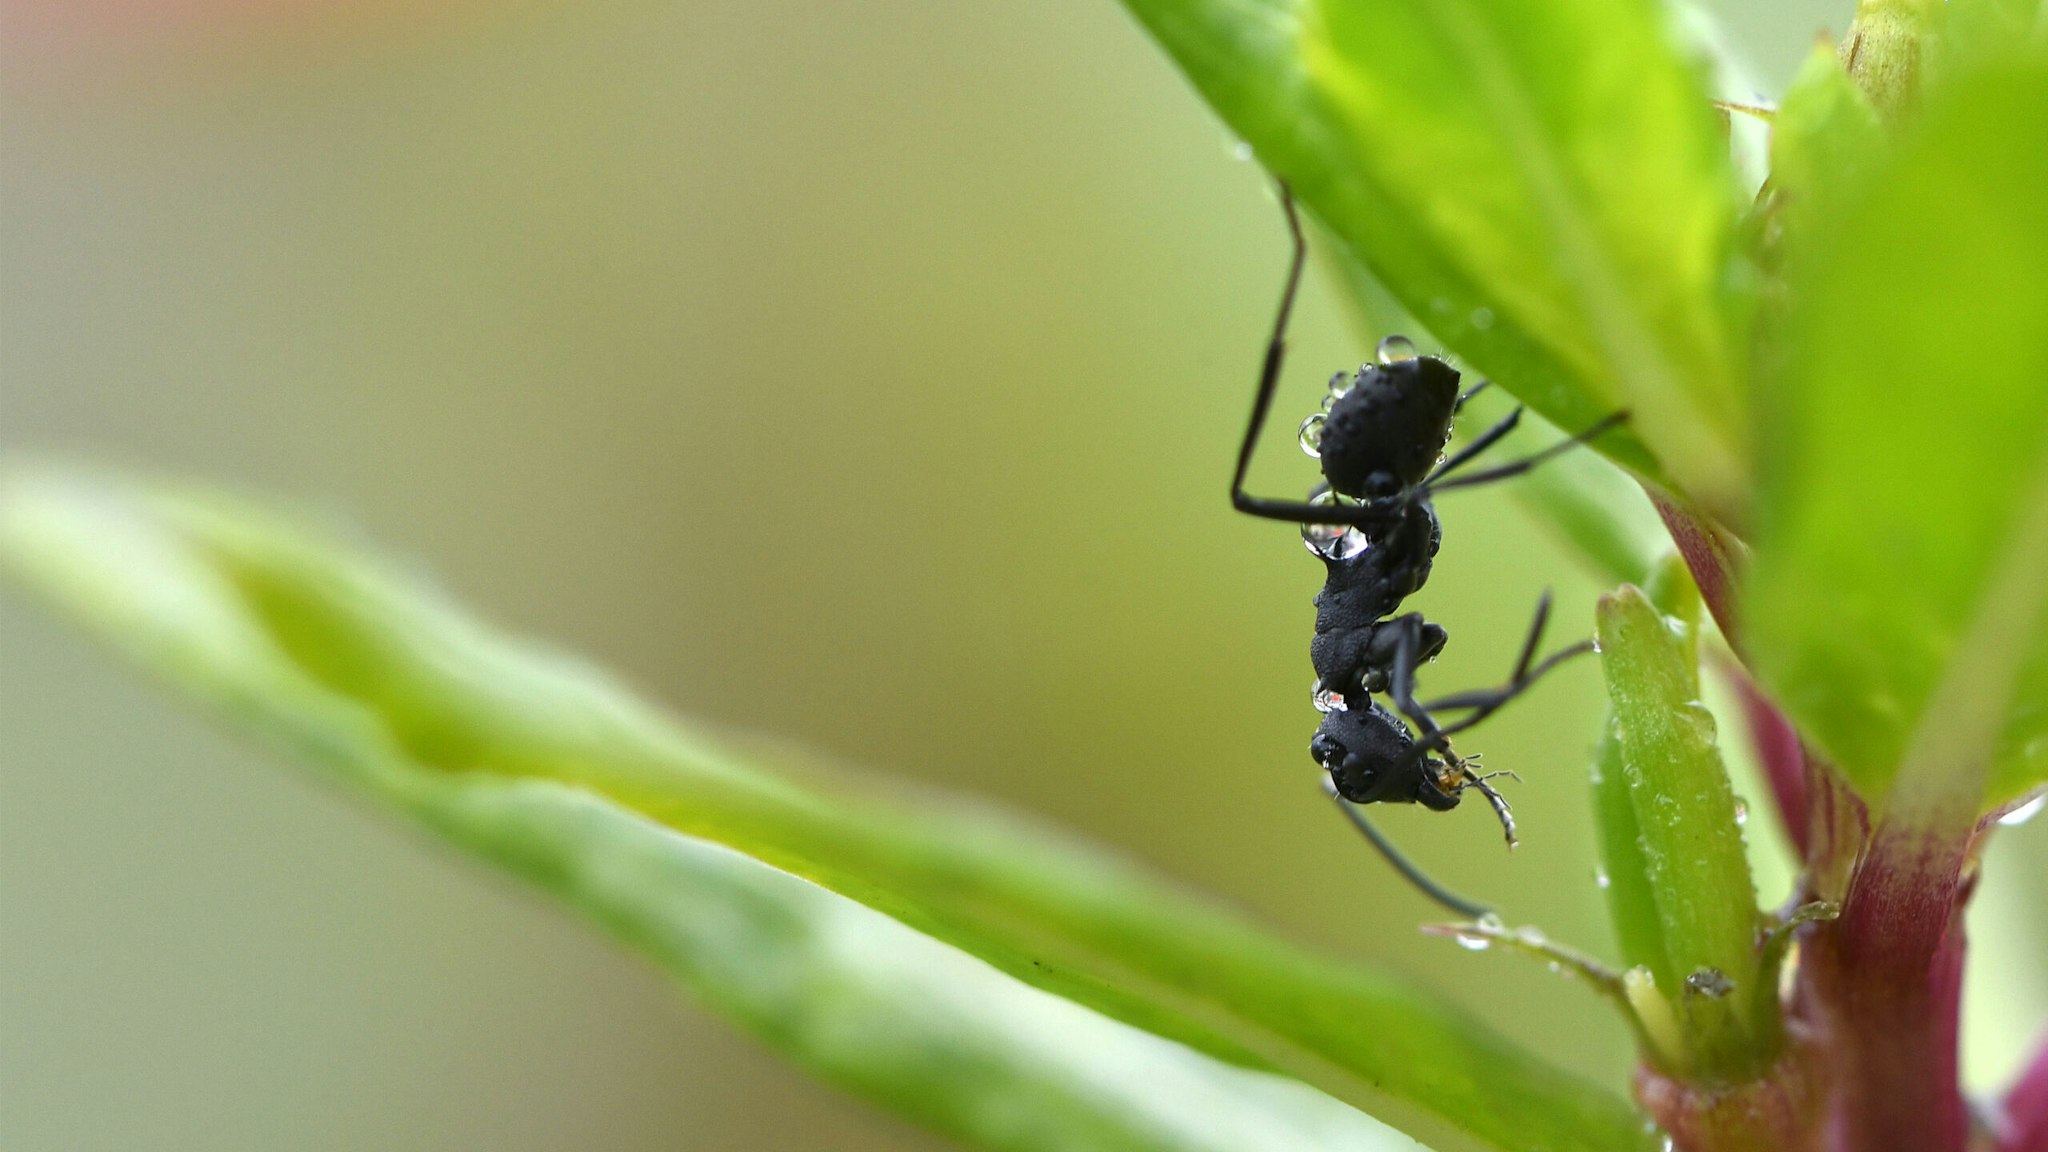 A Black garden ant eats an insect at Kirtipur, Kathmandu, Nepal on Sunday, May 09, 2021.